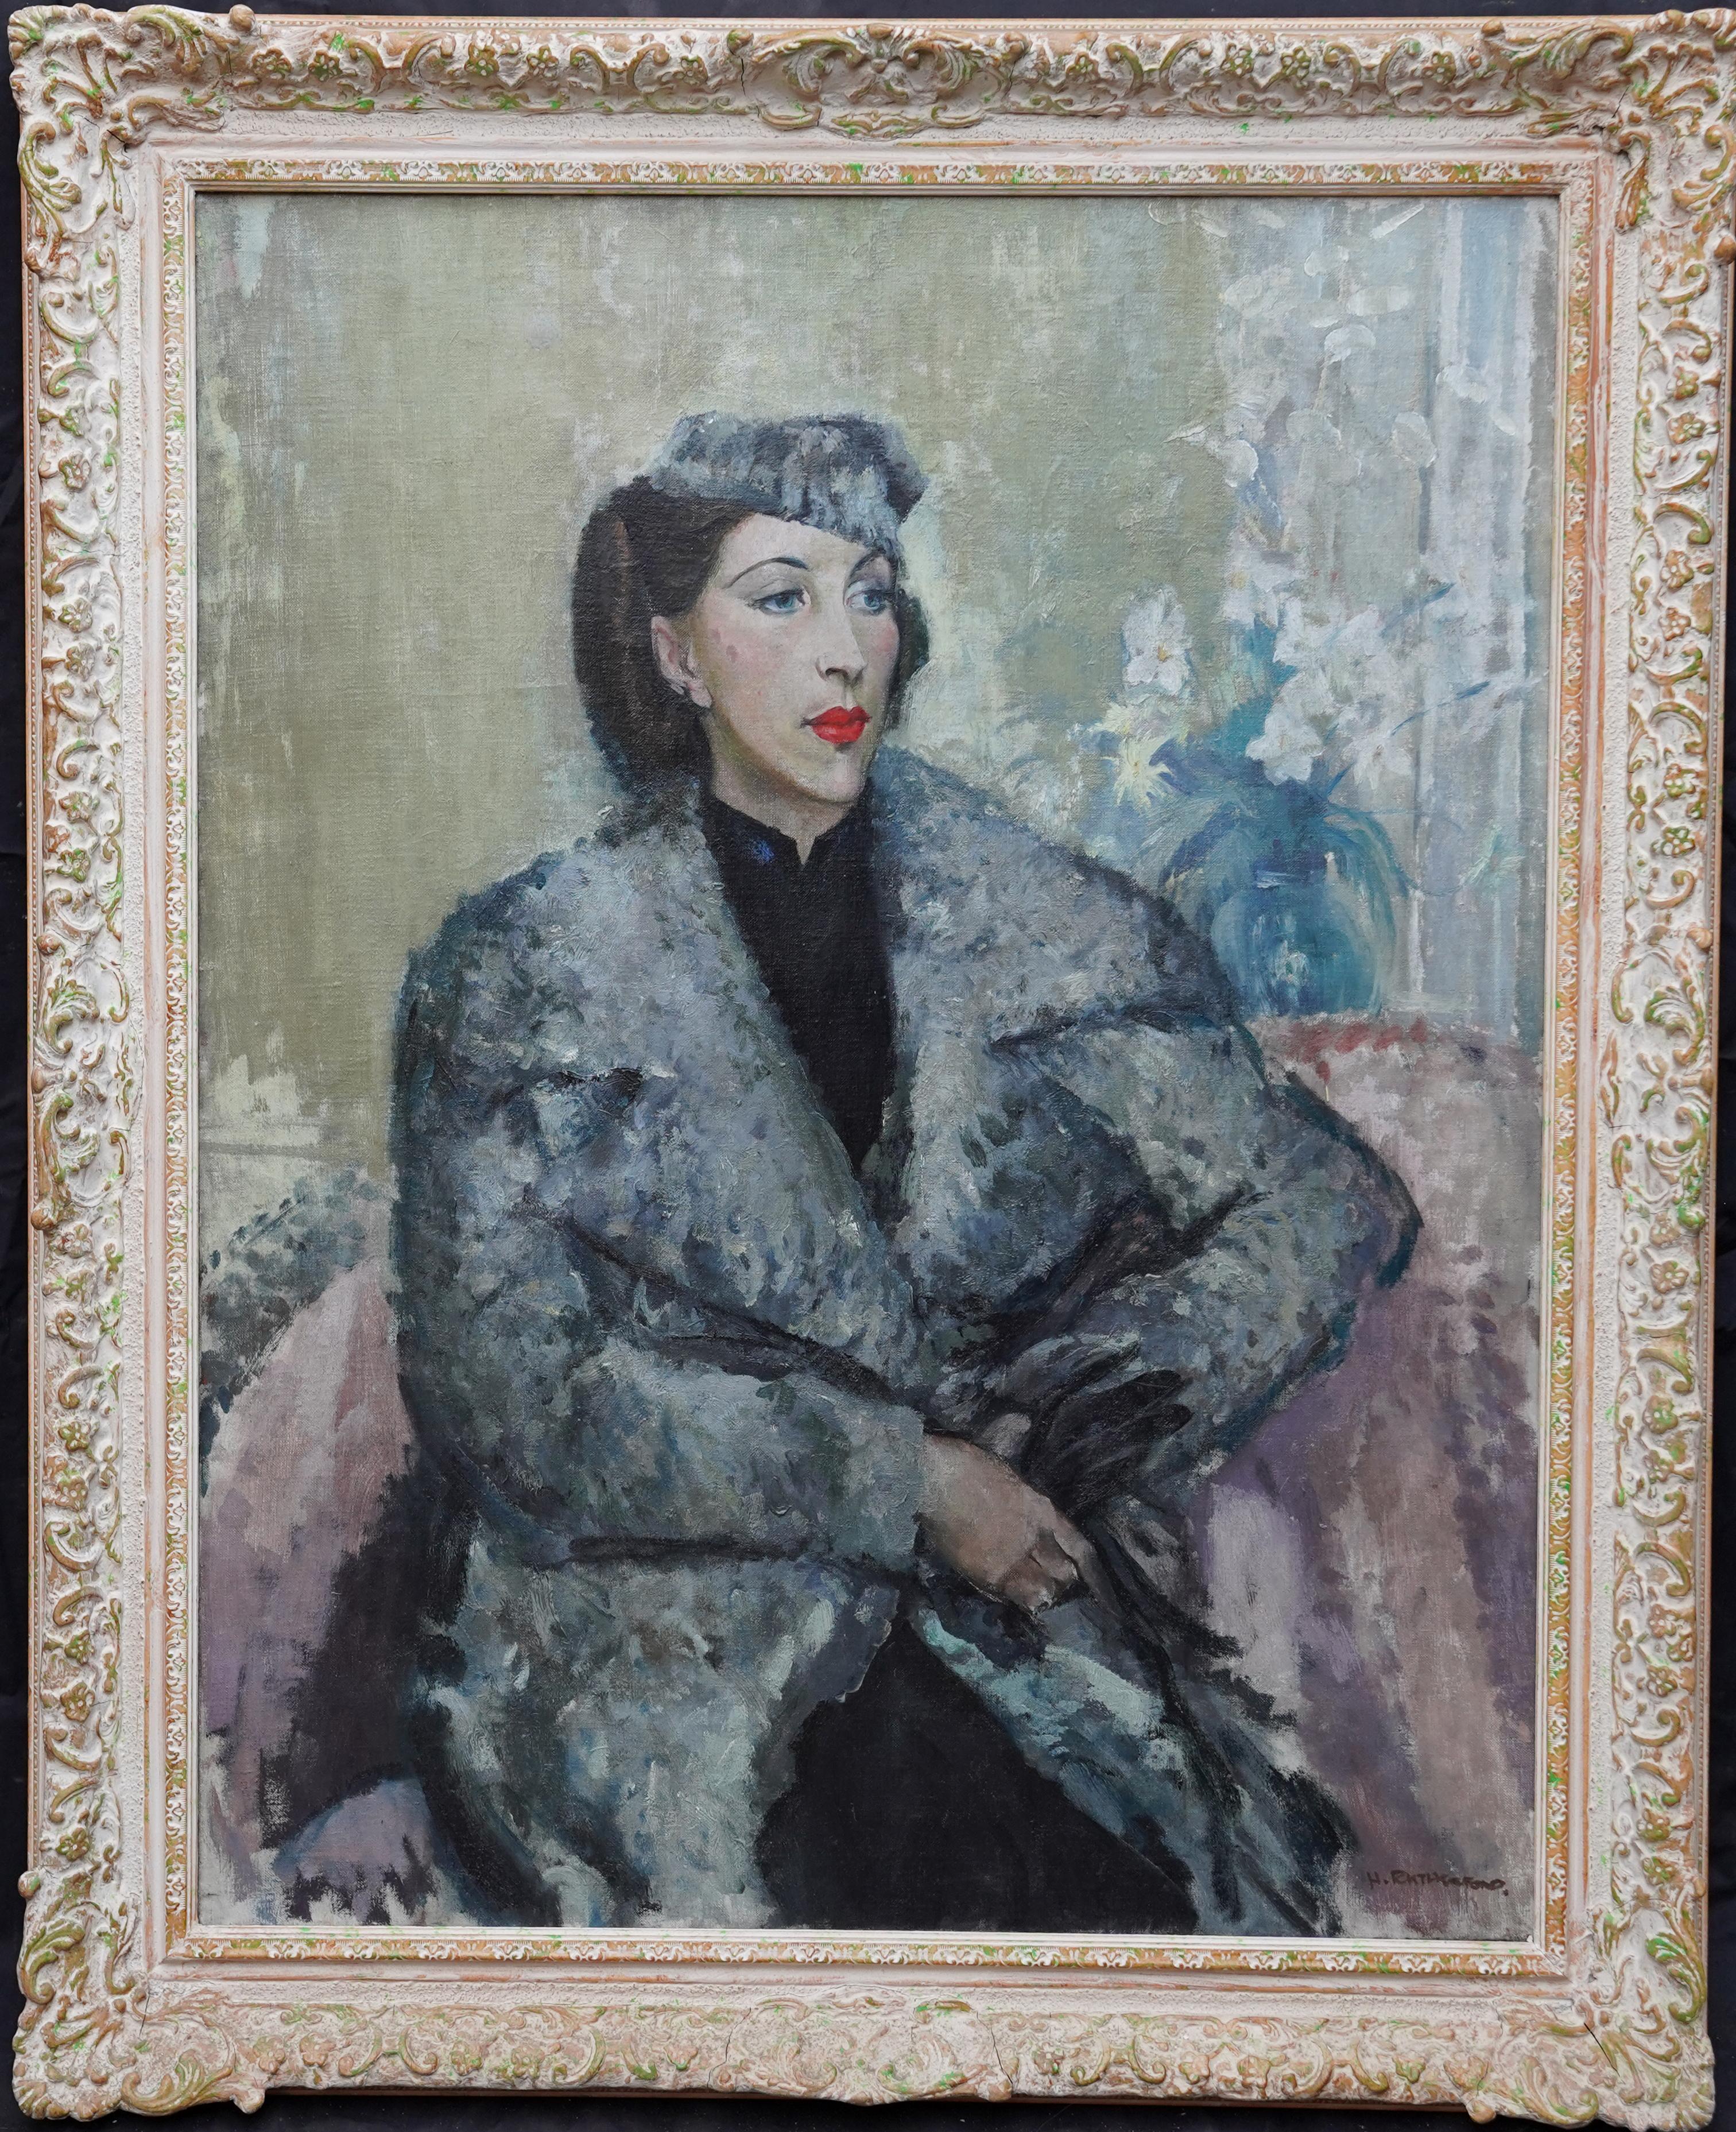 Harry Rutherford Portrait Painting - Post Impressionist Portrait of a Woman - British 40's art portrait oil painting